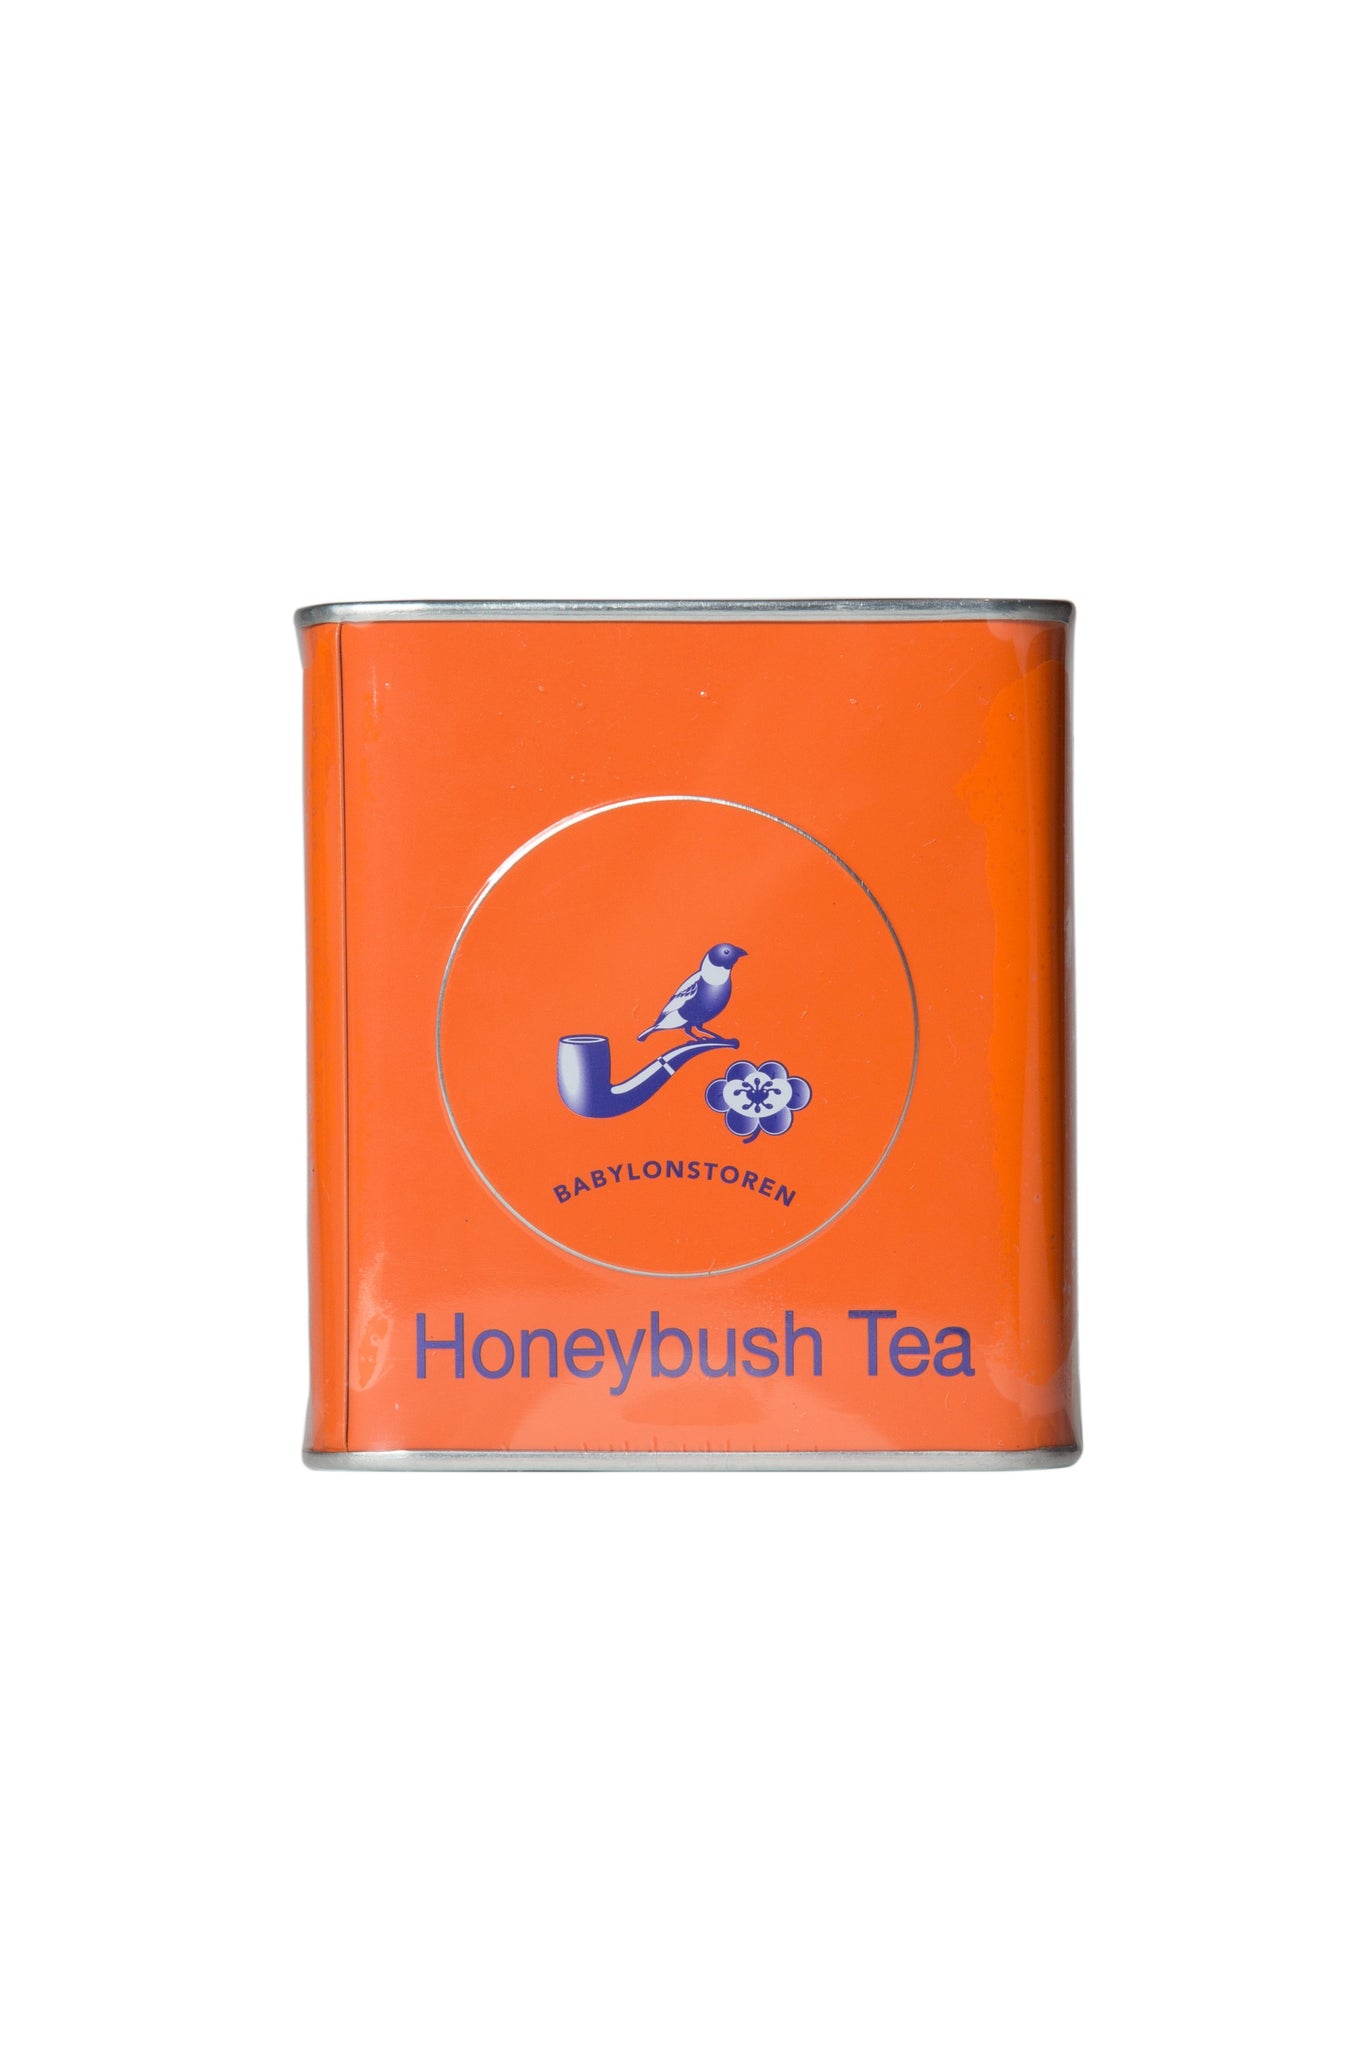 Babylonstoren Honeybush Tea